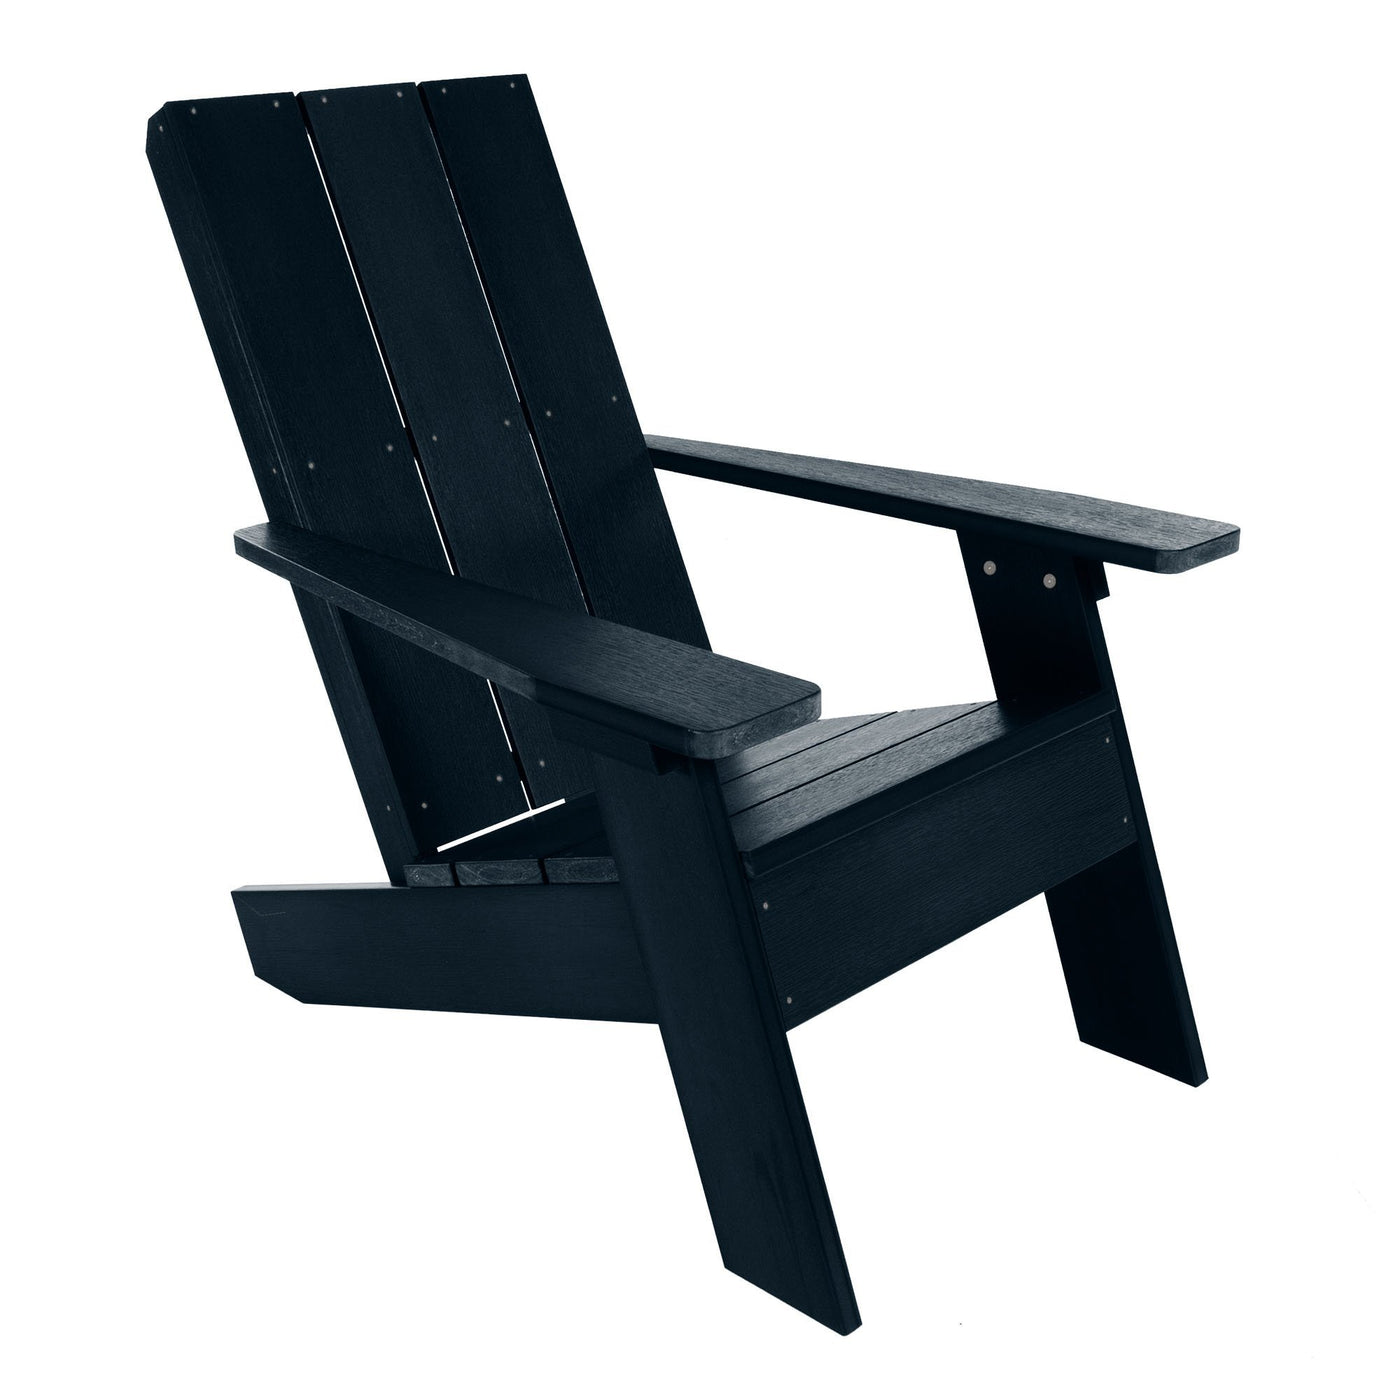 Italica Modern Adirondack chair in Federal Blue 